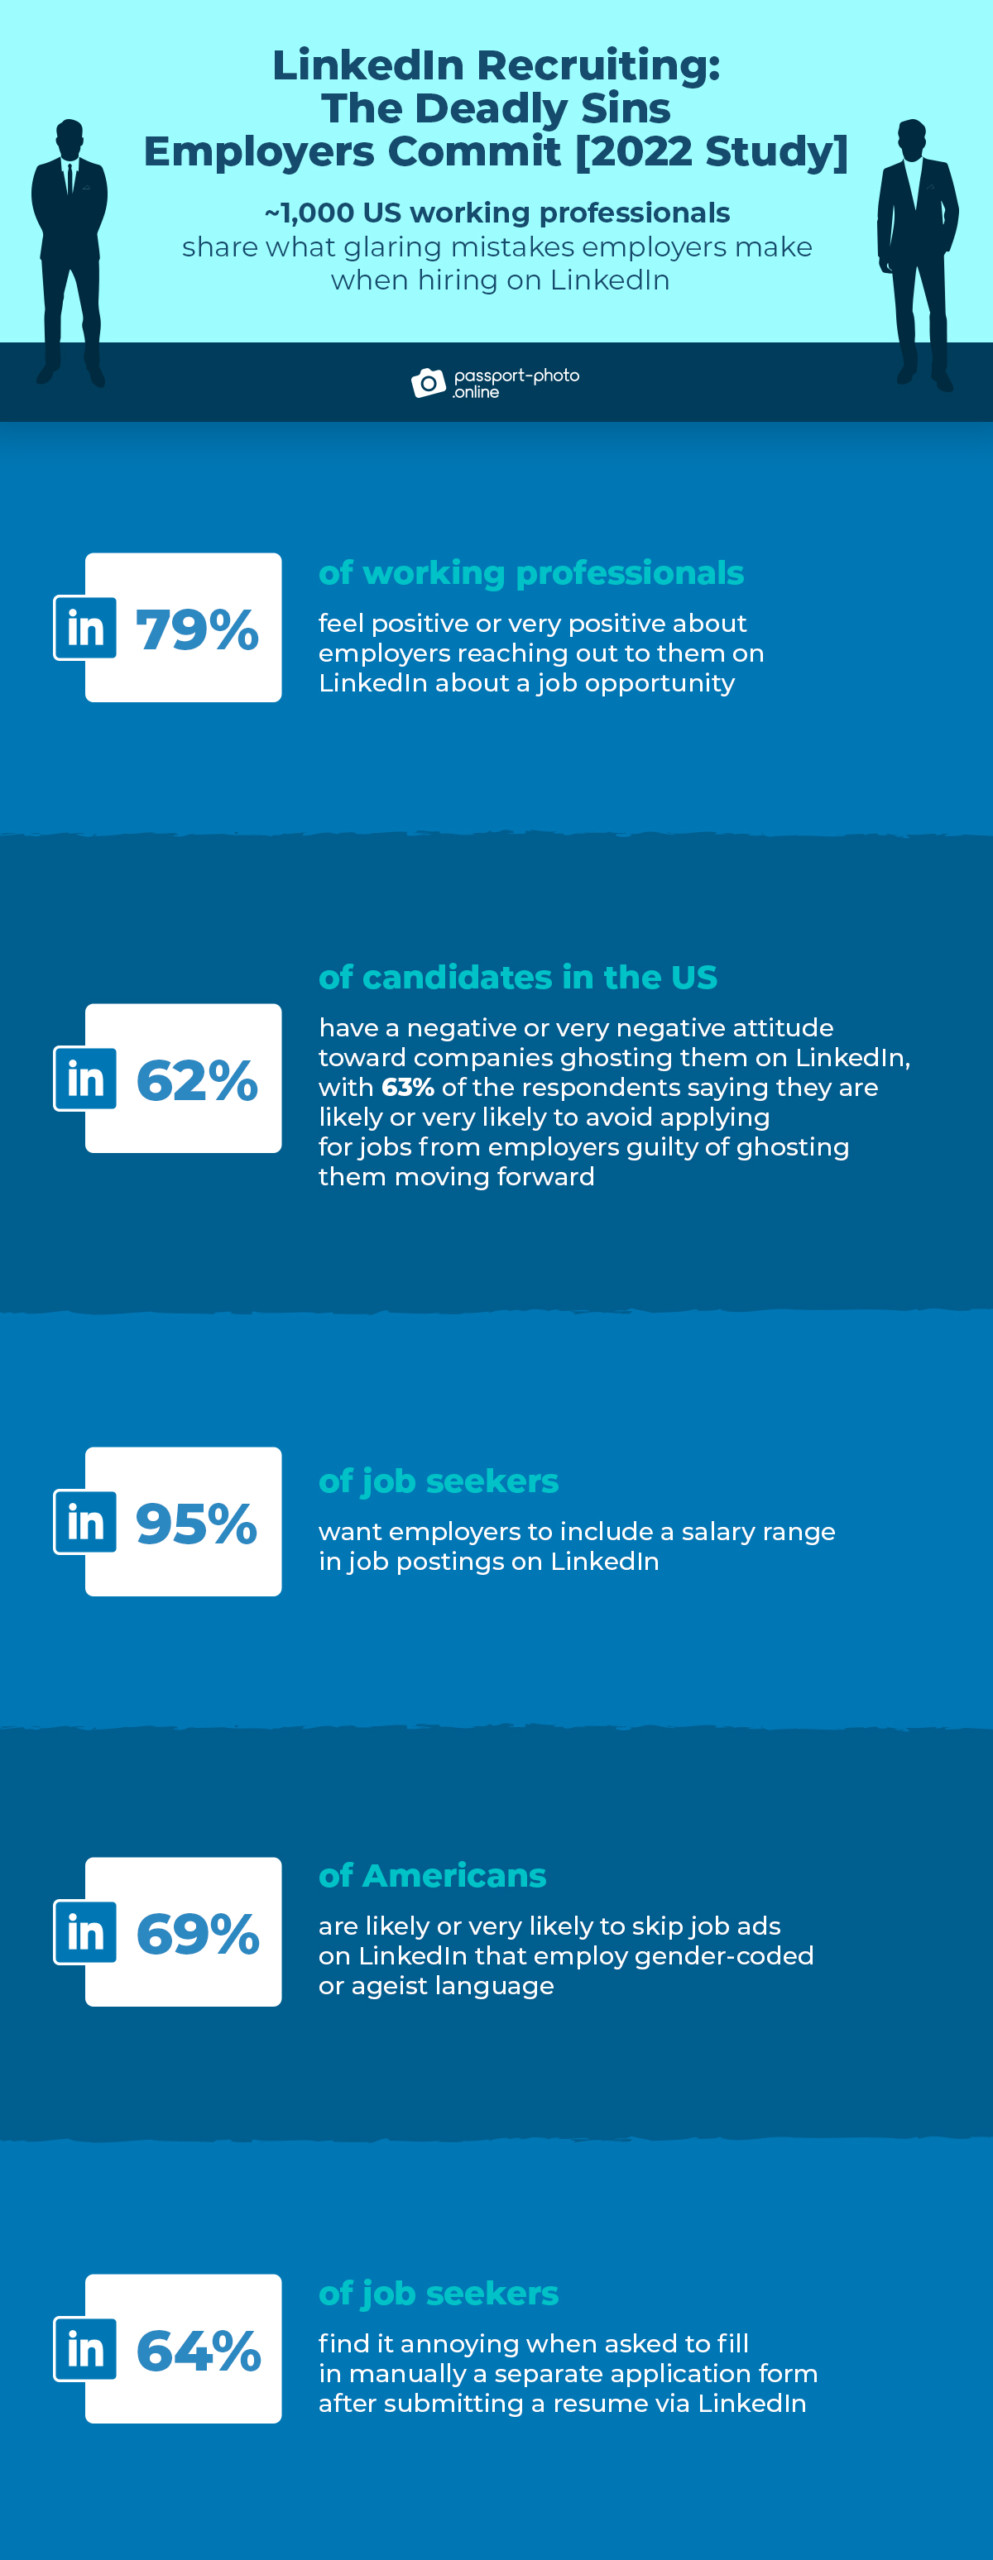 LinkedIn recruiting: the deadly sins employers commit (key takeaways)